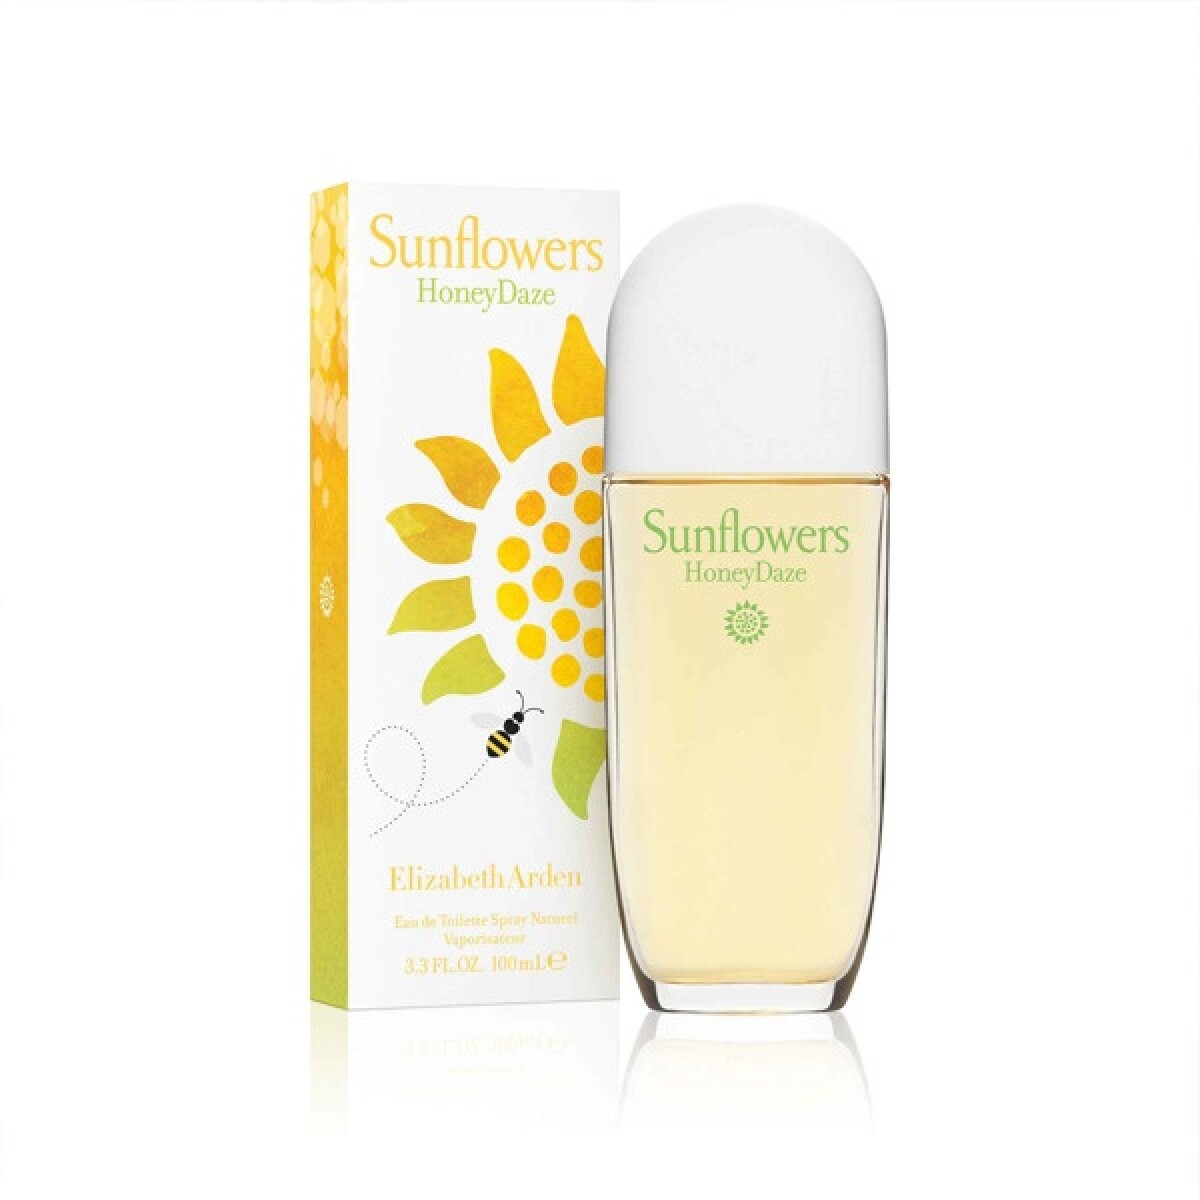 Perfume Elizabeth Arden Sunflowers Honey Daze Edt 100ml 